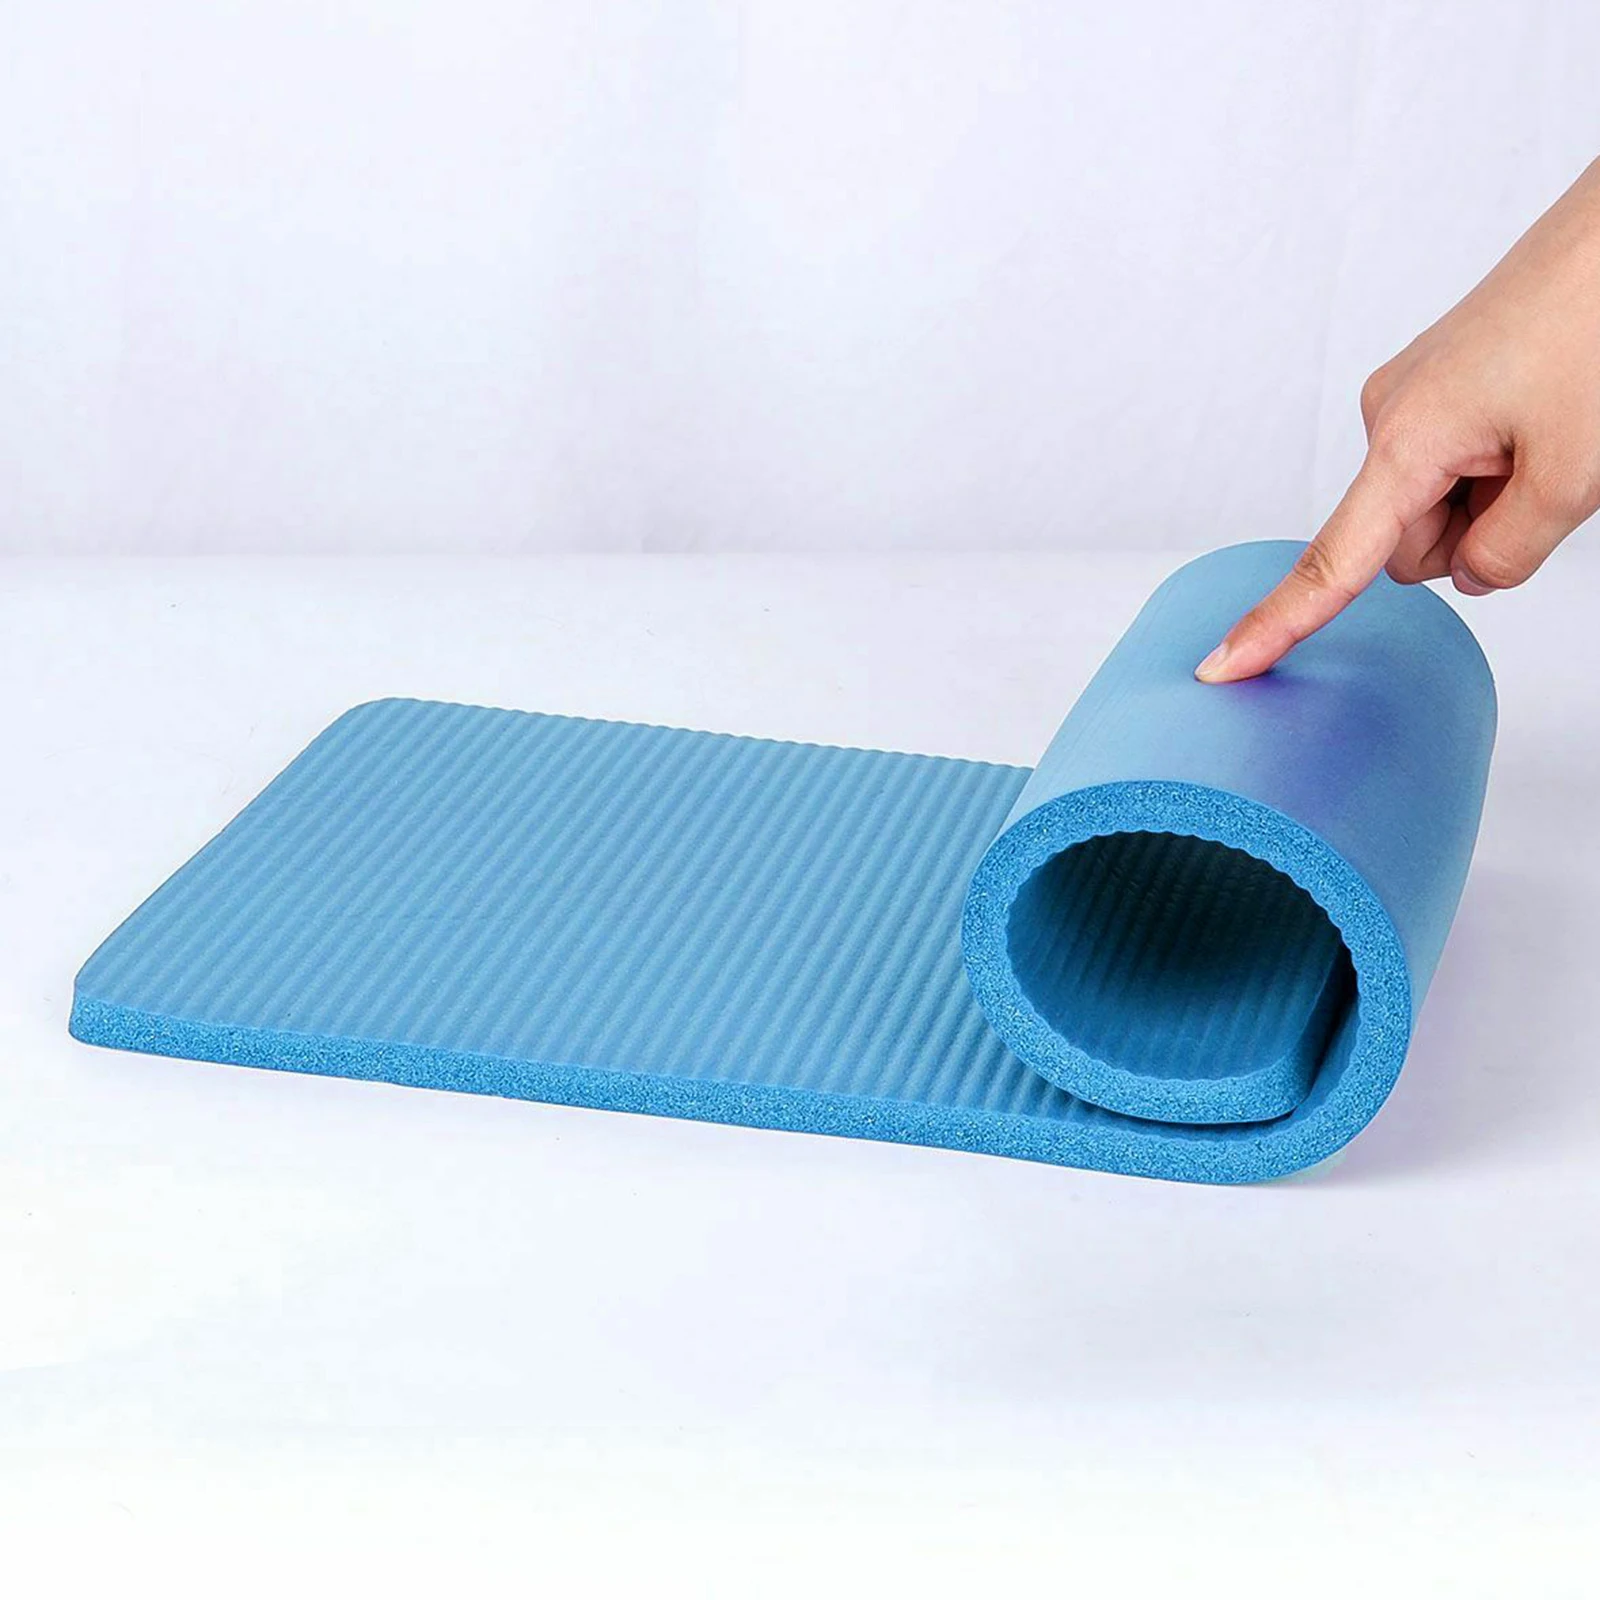 Yoga Knee Pad Cushion Anti-Slip Thick Exercise Travel Fitness Mat Mat Floor P5J9 